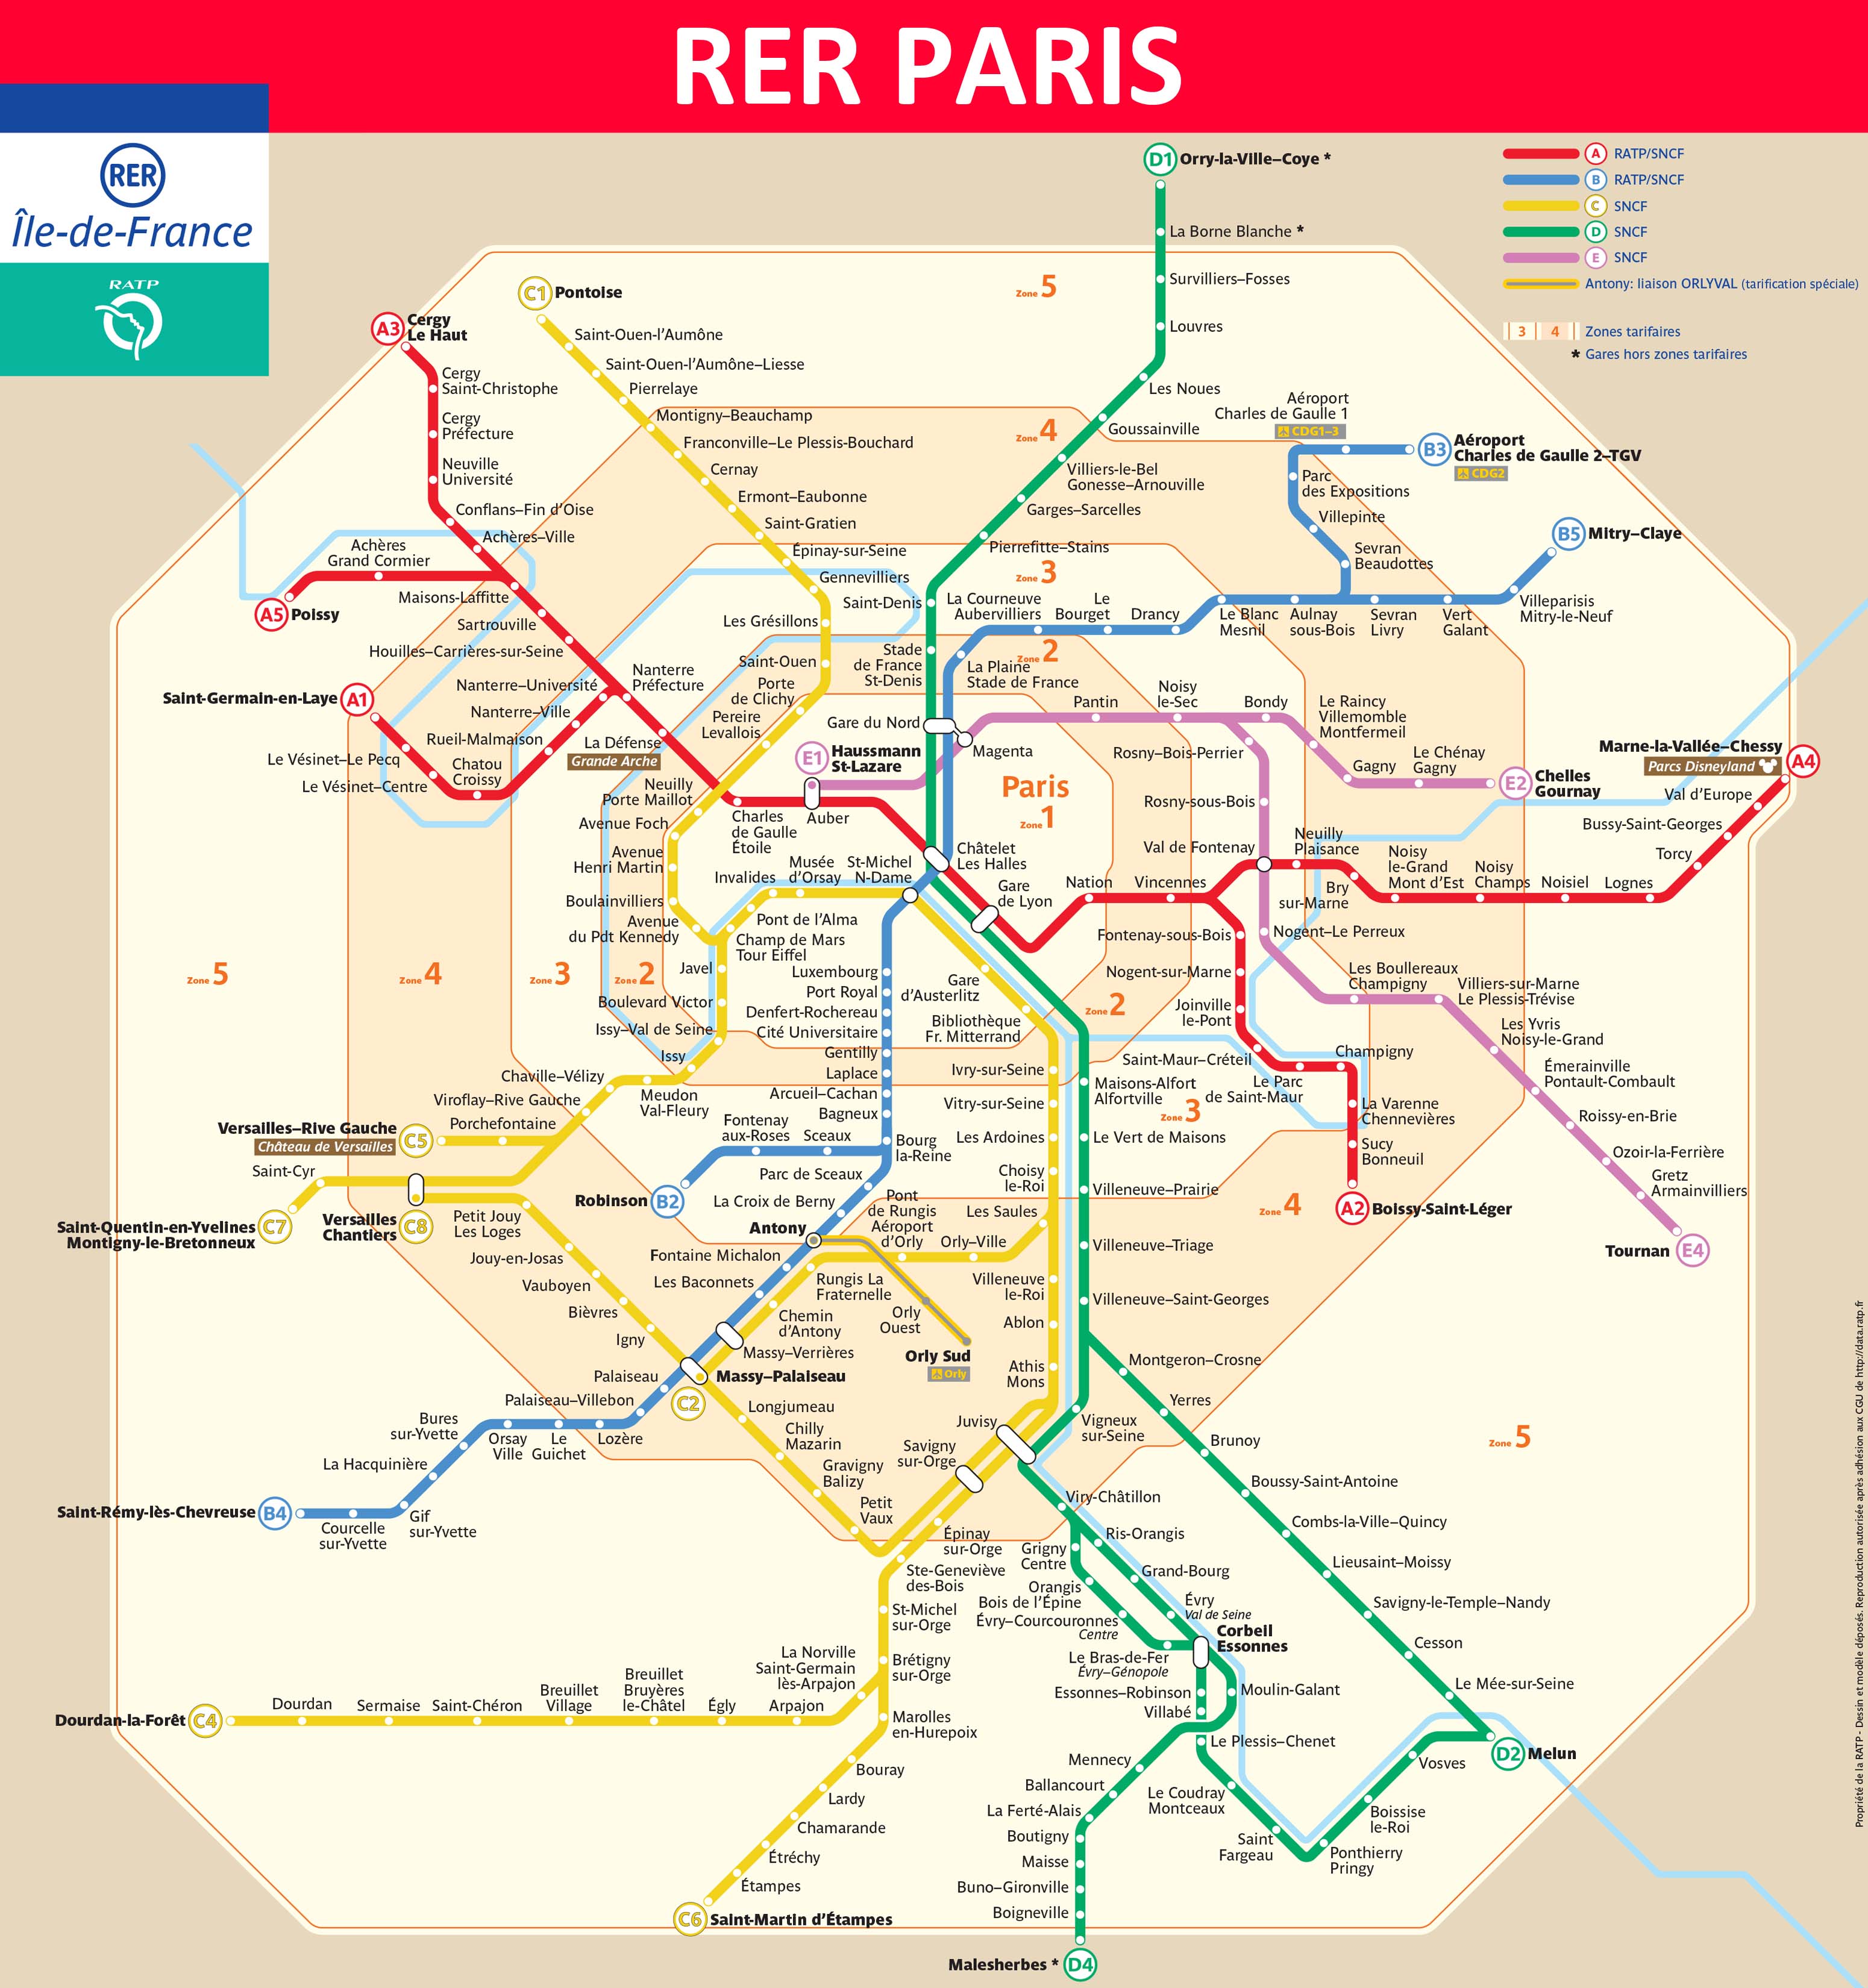 Paris RER Map 2019 - Lines, Schedules, Stations, Tickets, Tourist Info